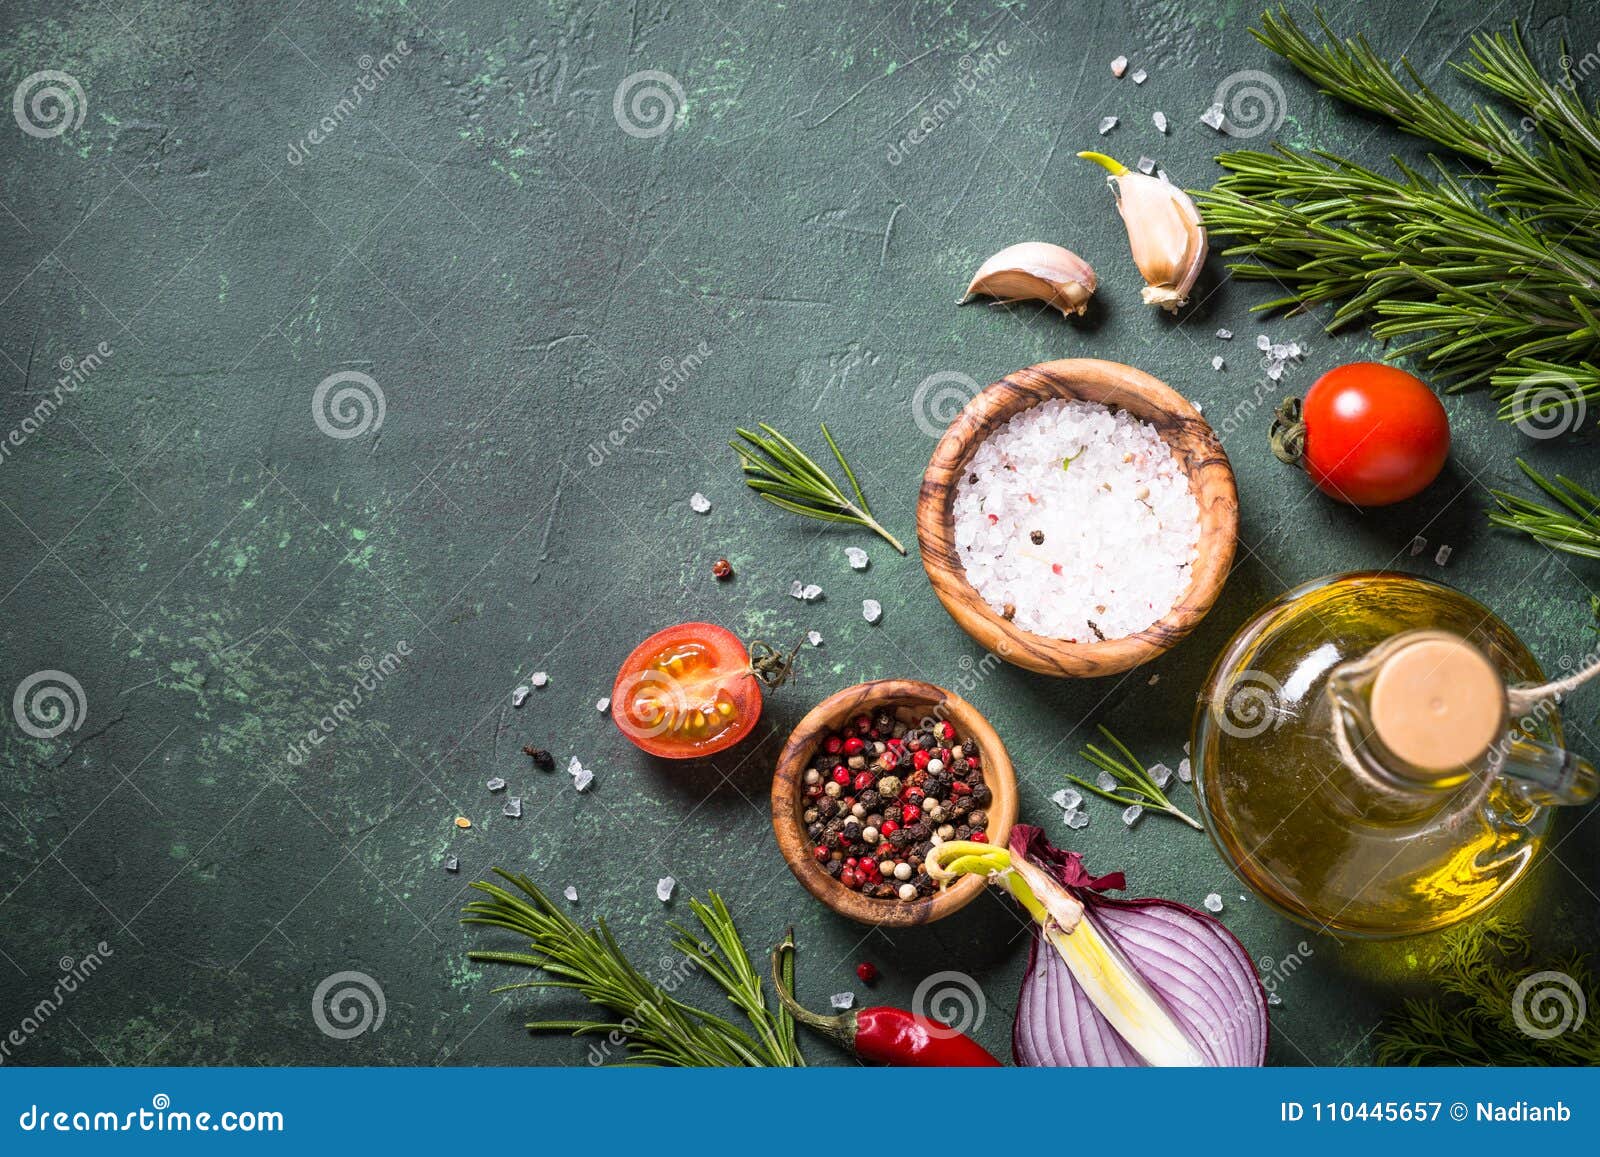 Food Background on Dark Stone Table. Stock Image - Image of recipe ...